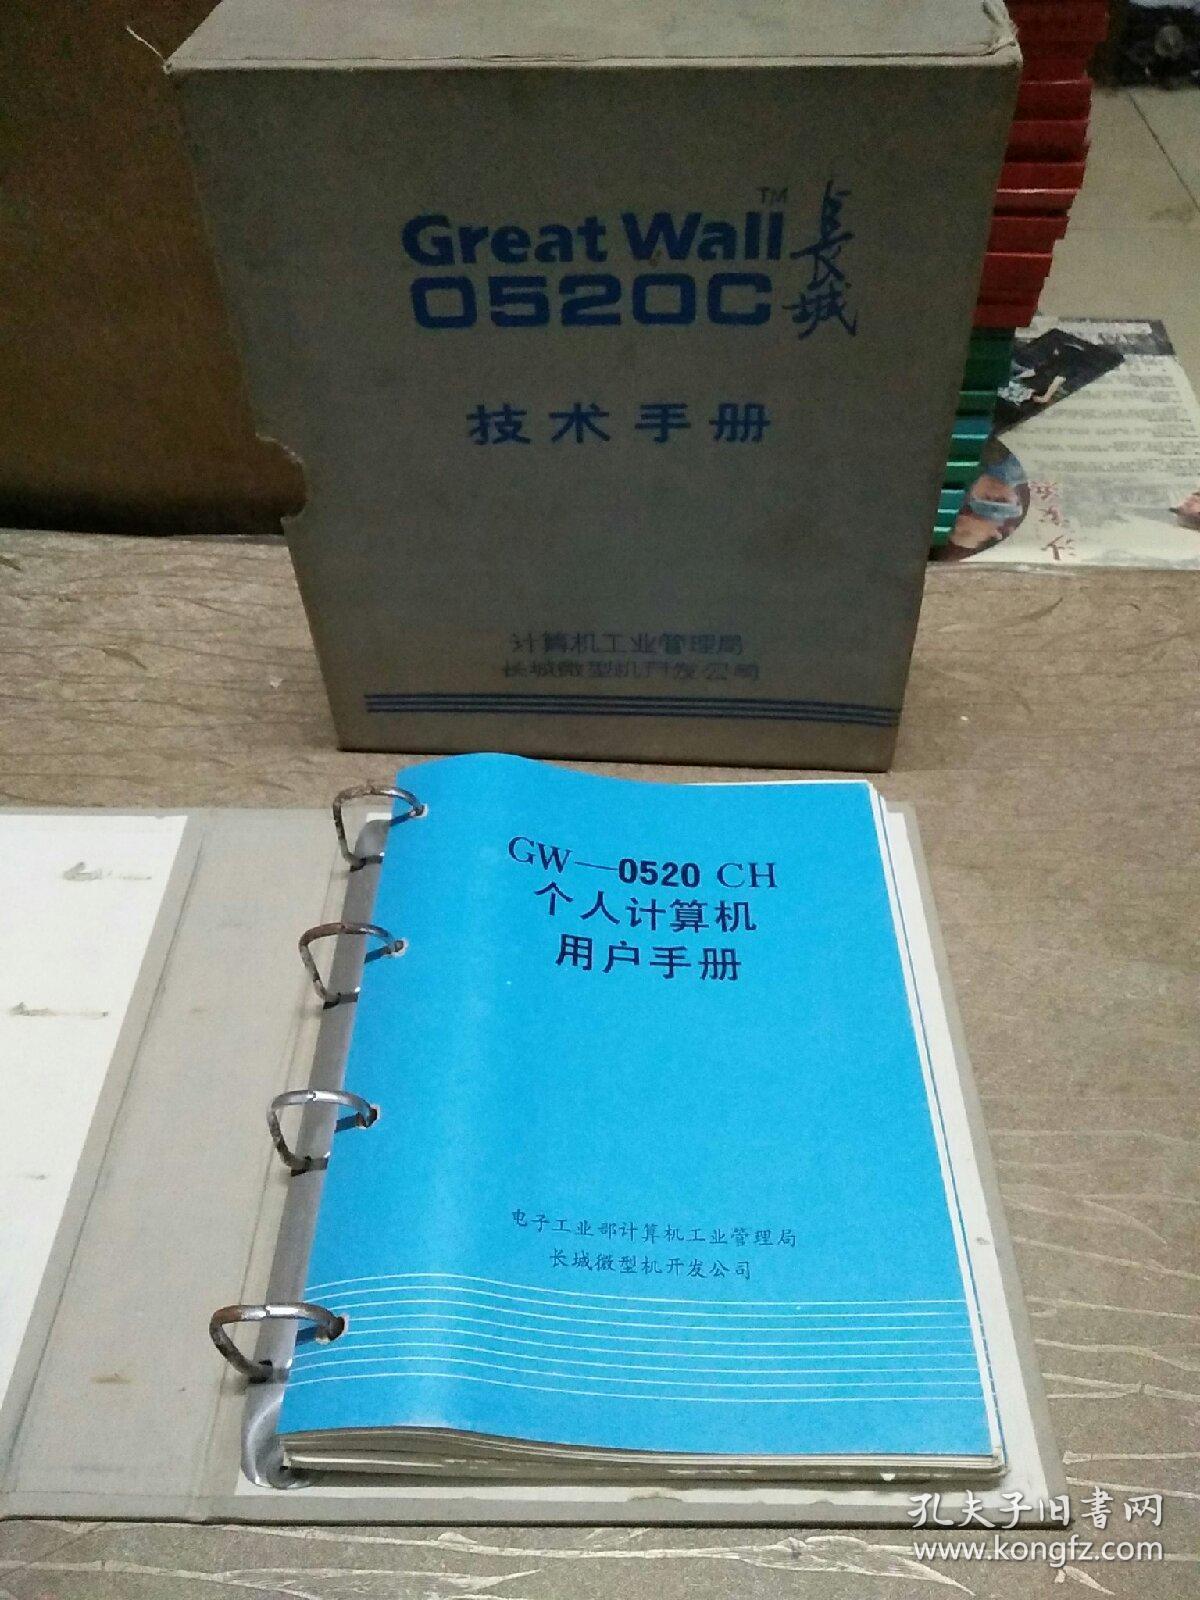 Great Wall 0520C 长城 技术手册：GW――0520 CH 个人计算机用户手册、GWBIOS 3.00用户手册